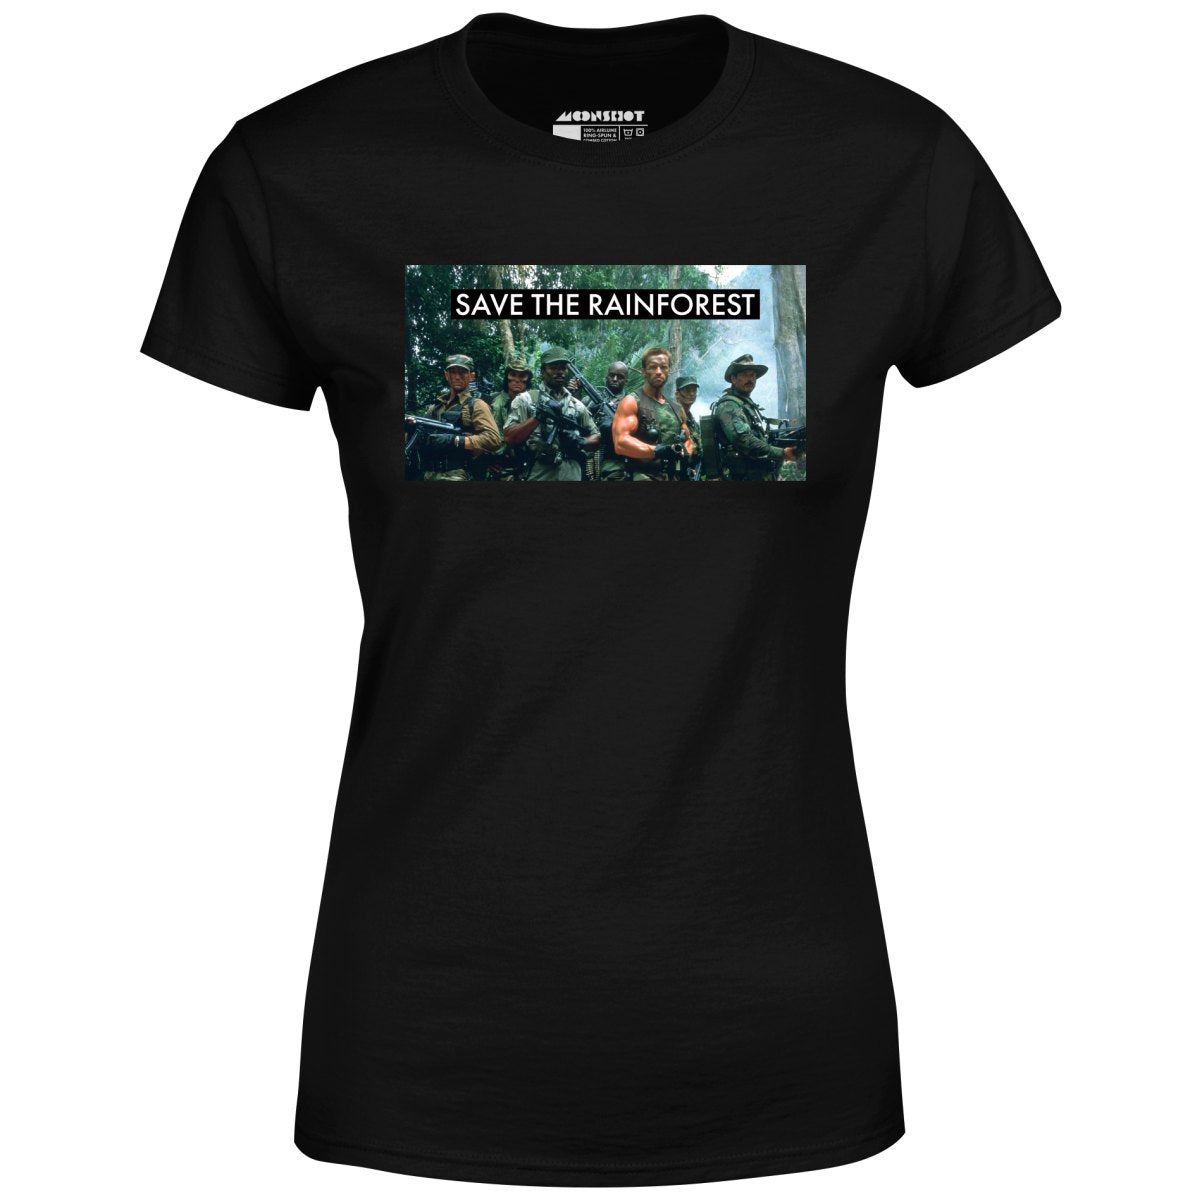 Save the Rainforest - Predator Parody - Women's T-Shirt